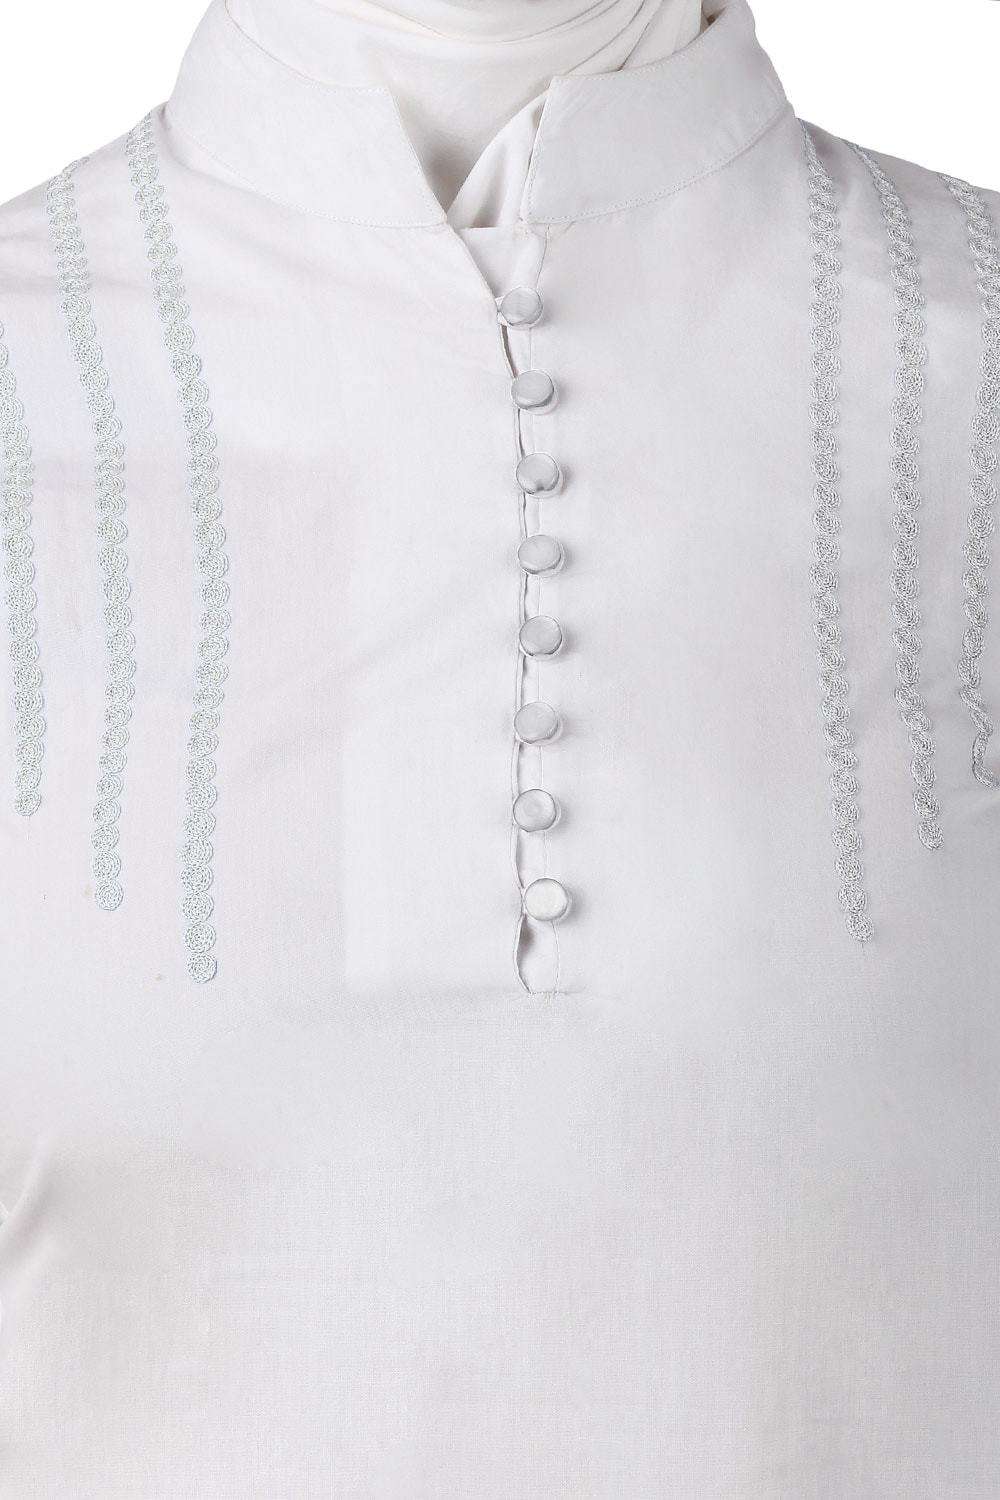 Hajna White Cotton Abaya Design